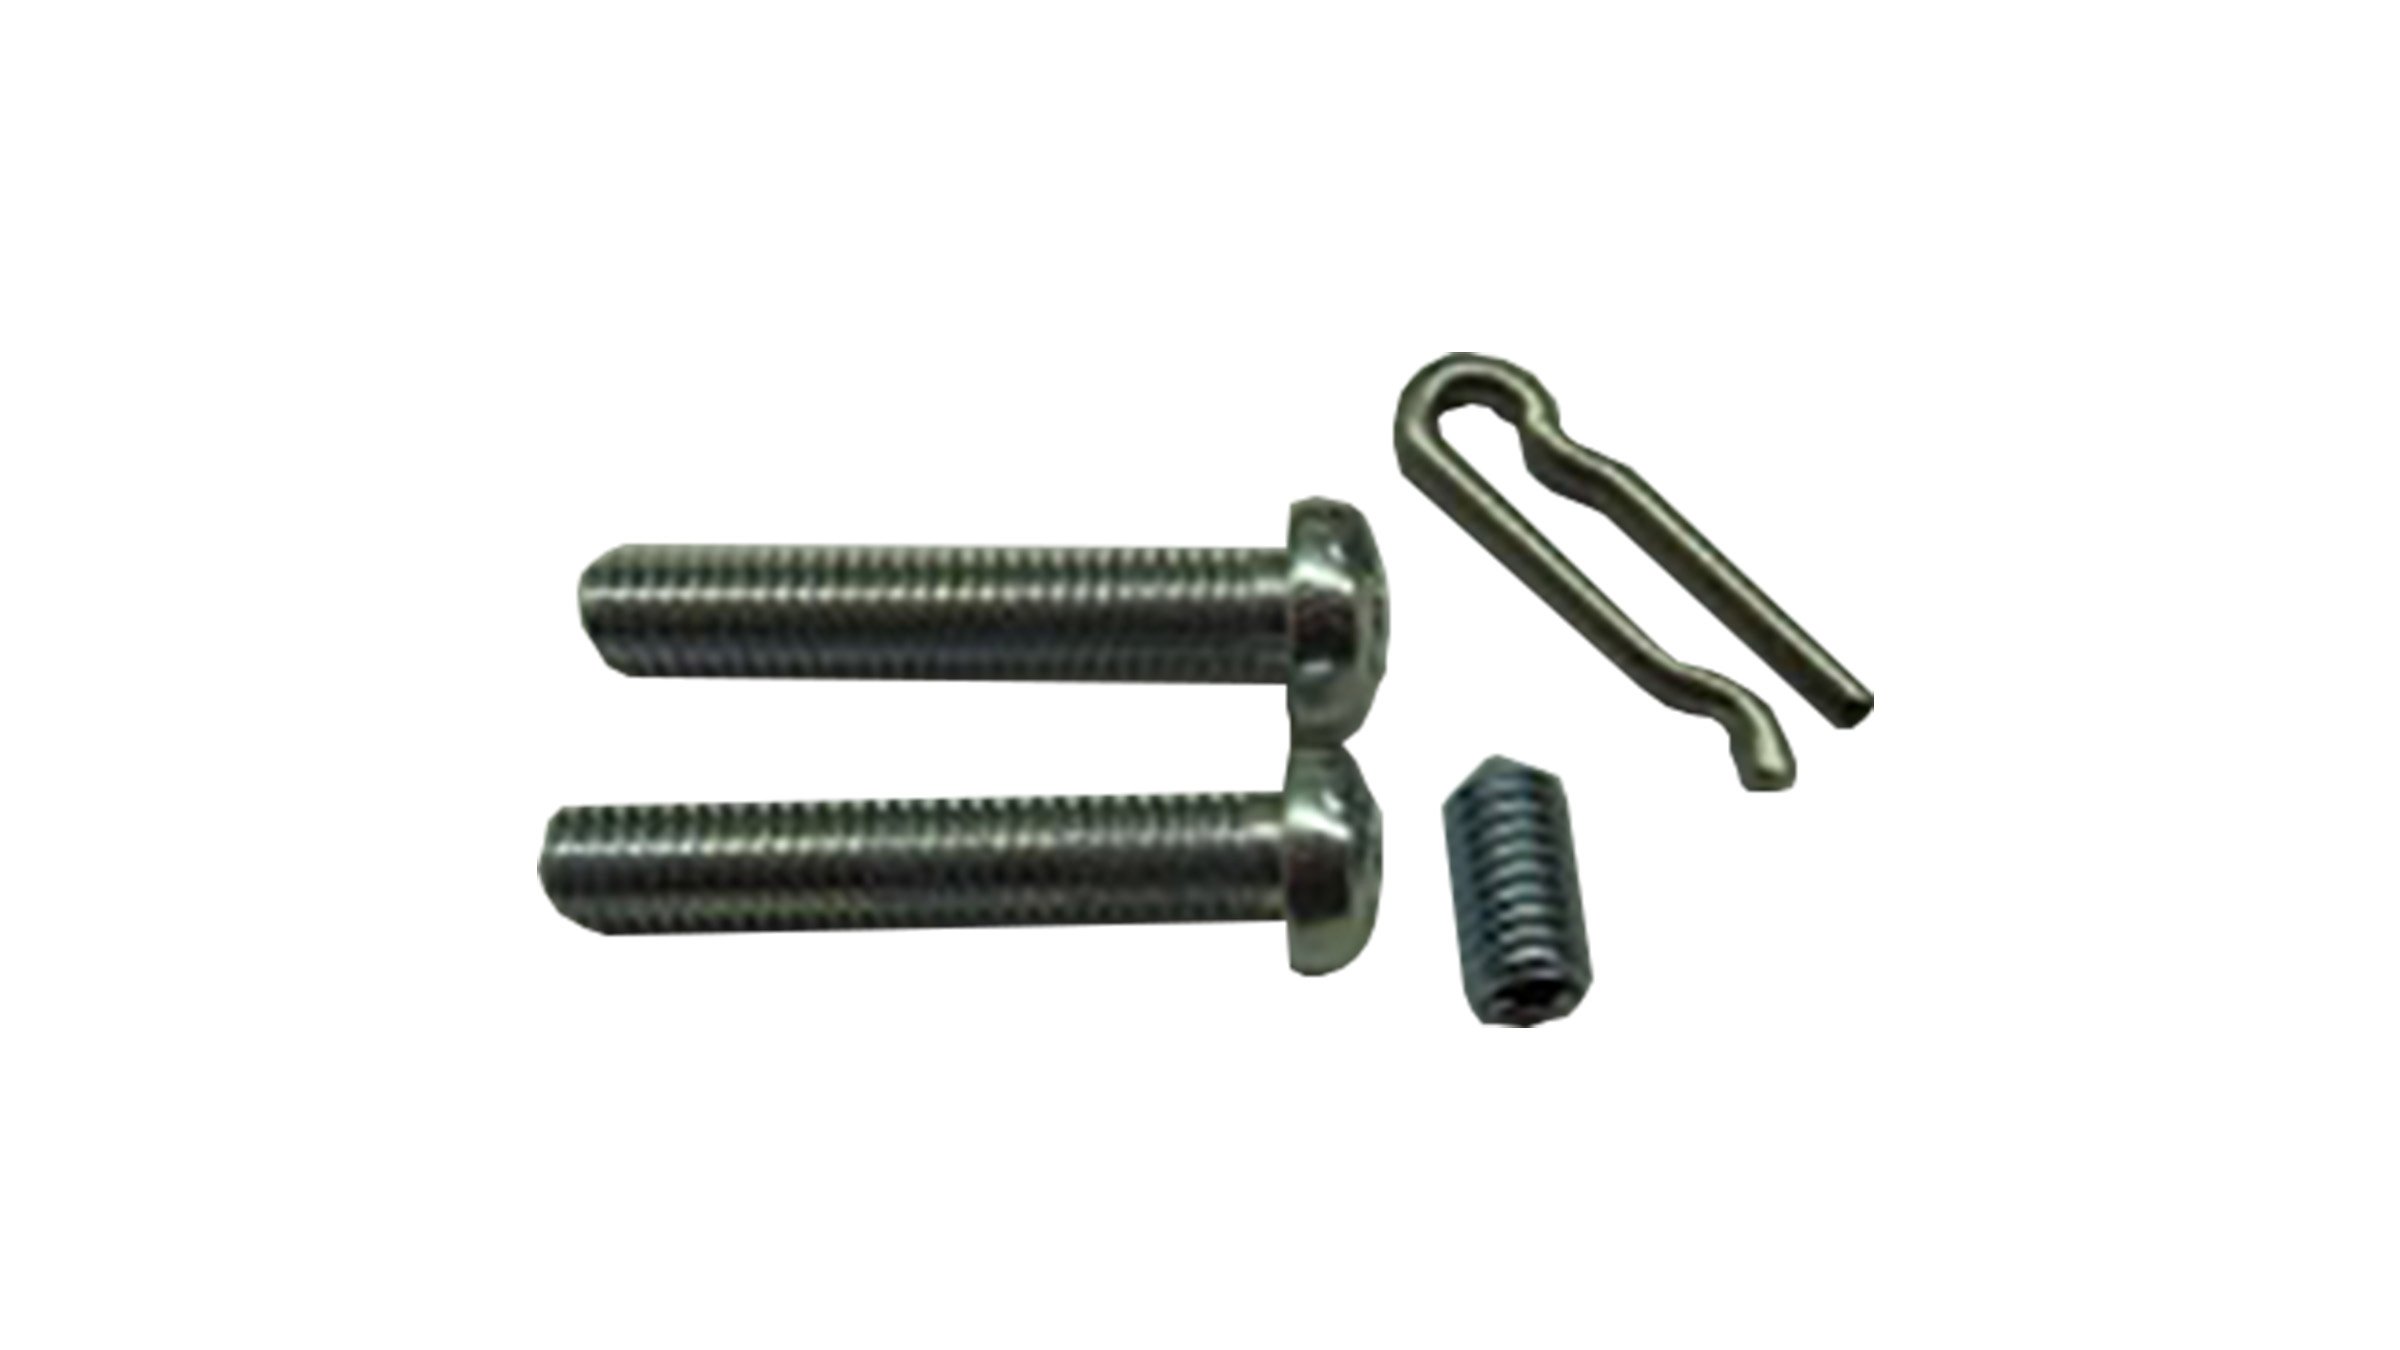 Sprecher & Schuh Series L11-30-HDWR kit showing screws, setscrew, and pin